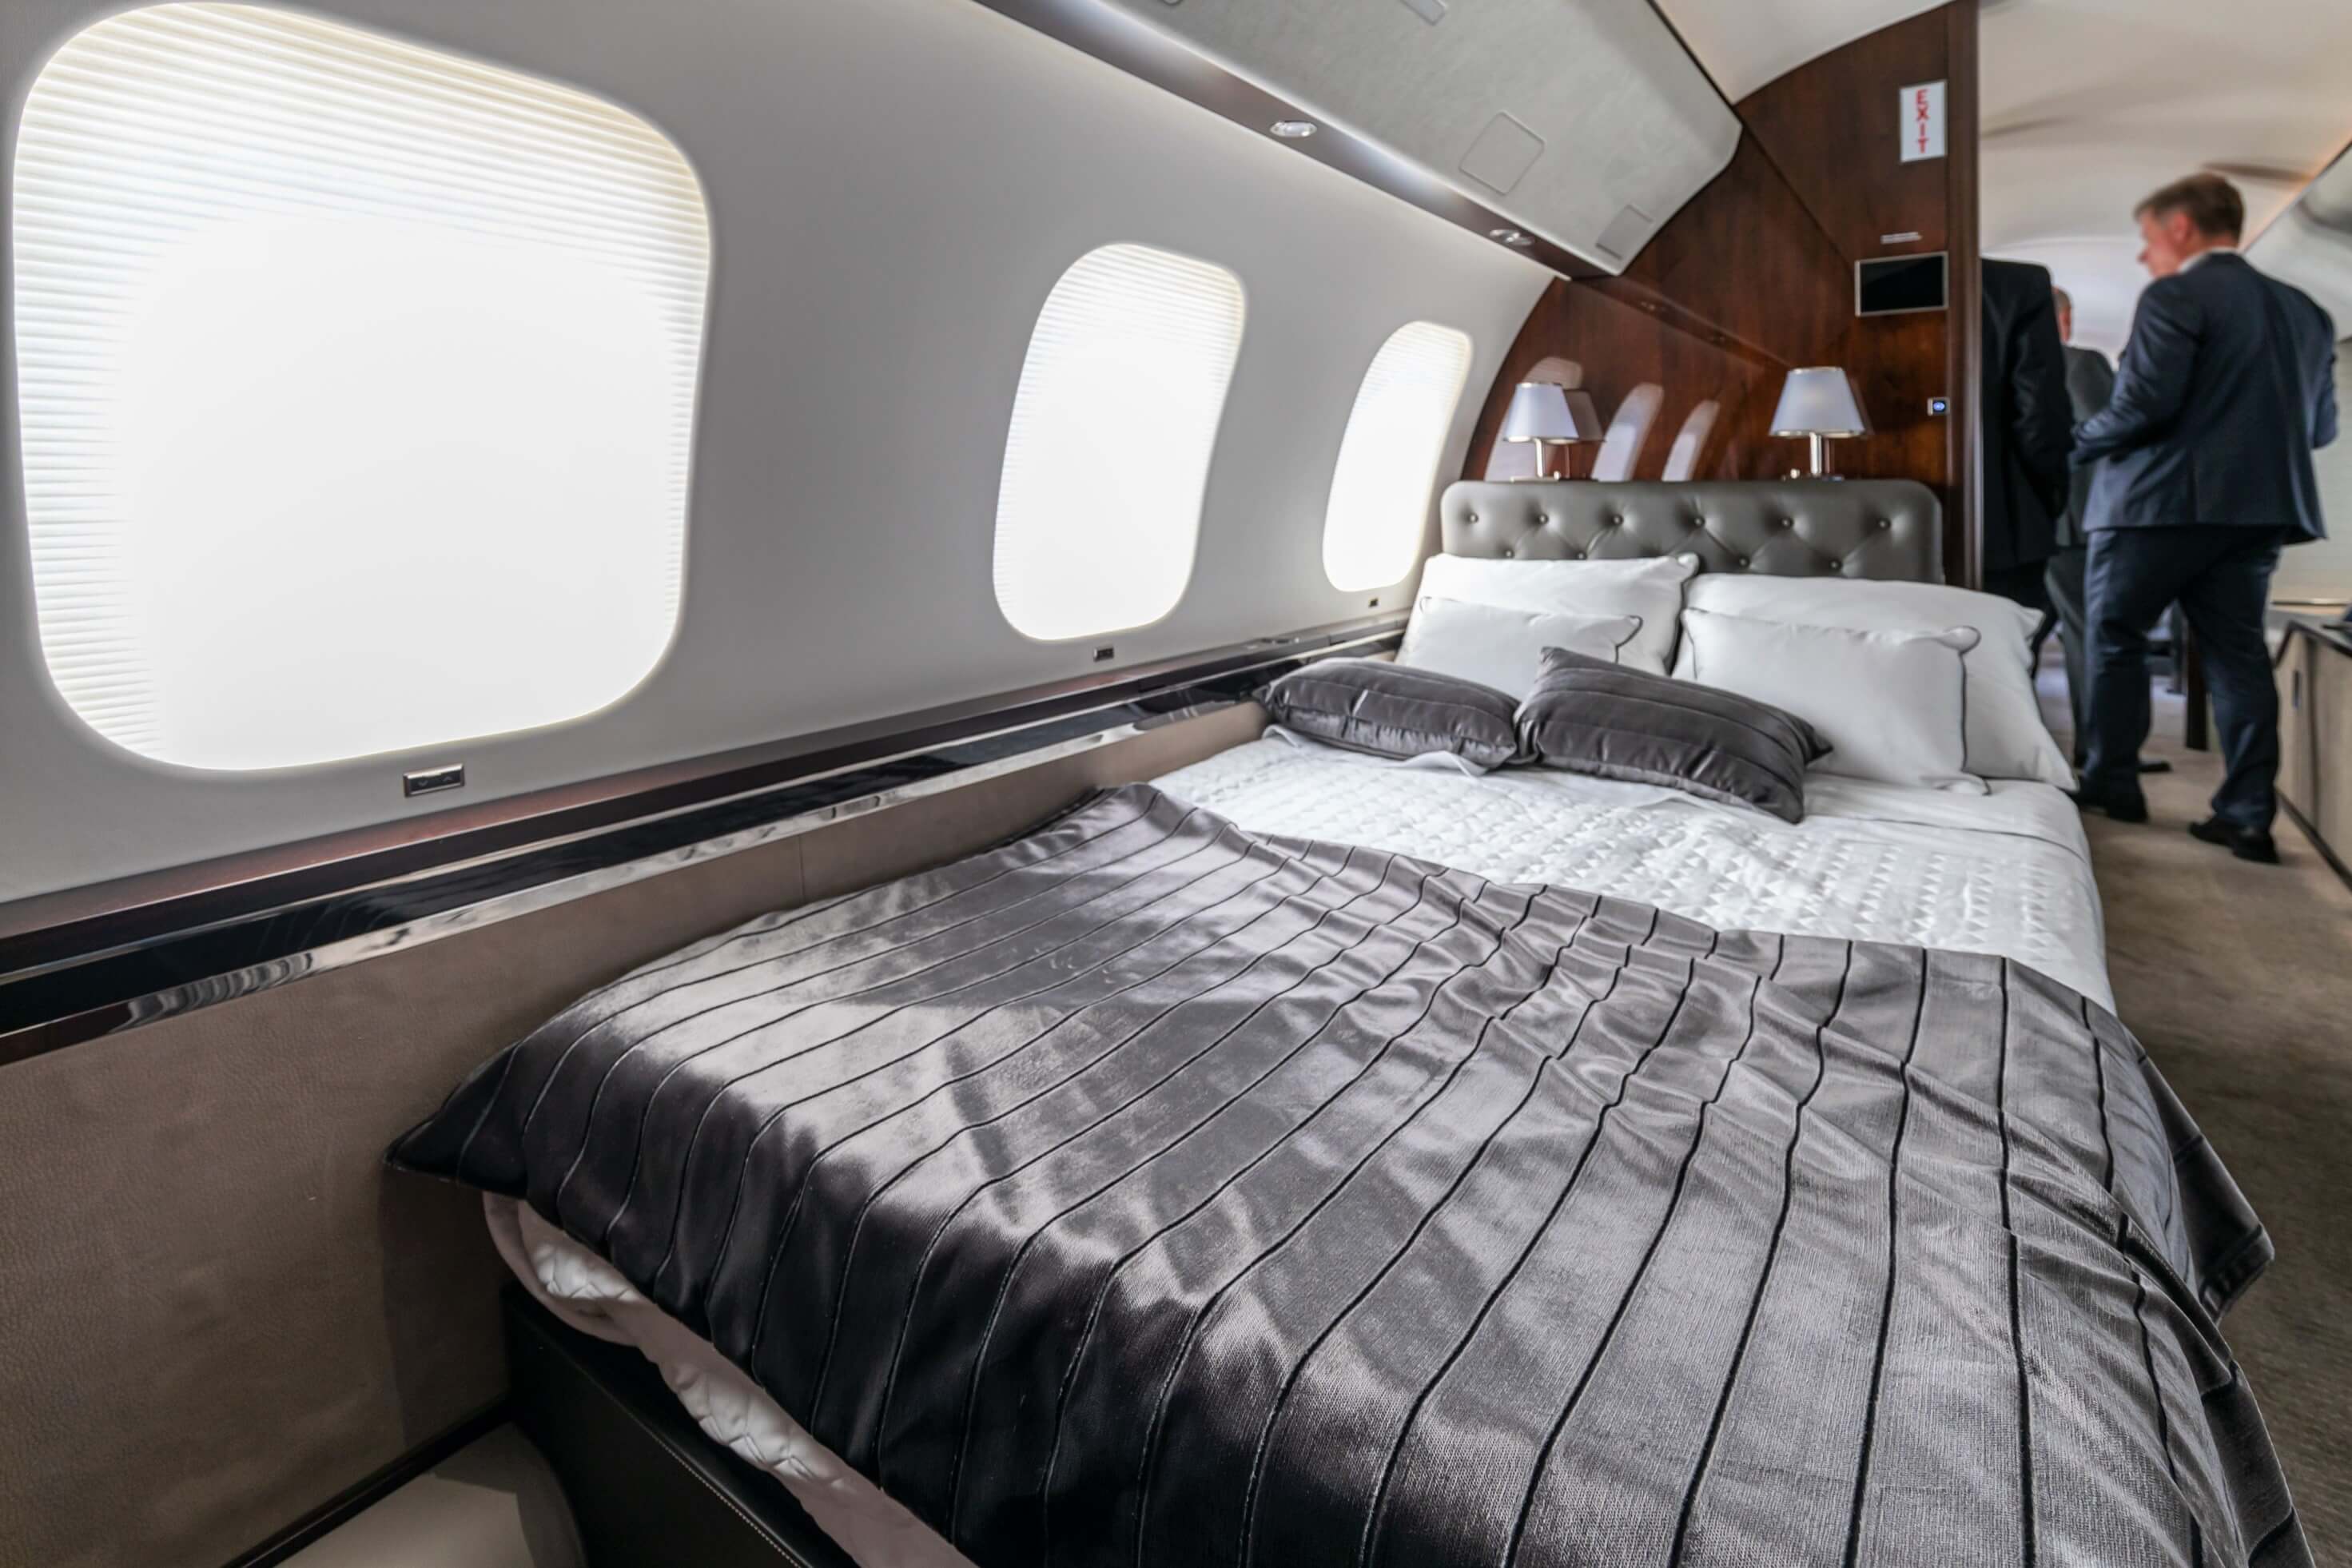 Cabin of Bombardier Global 7500